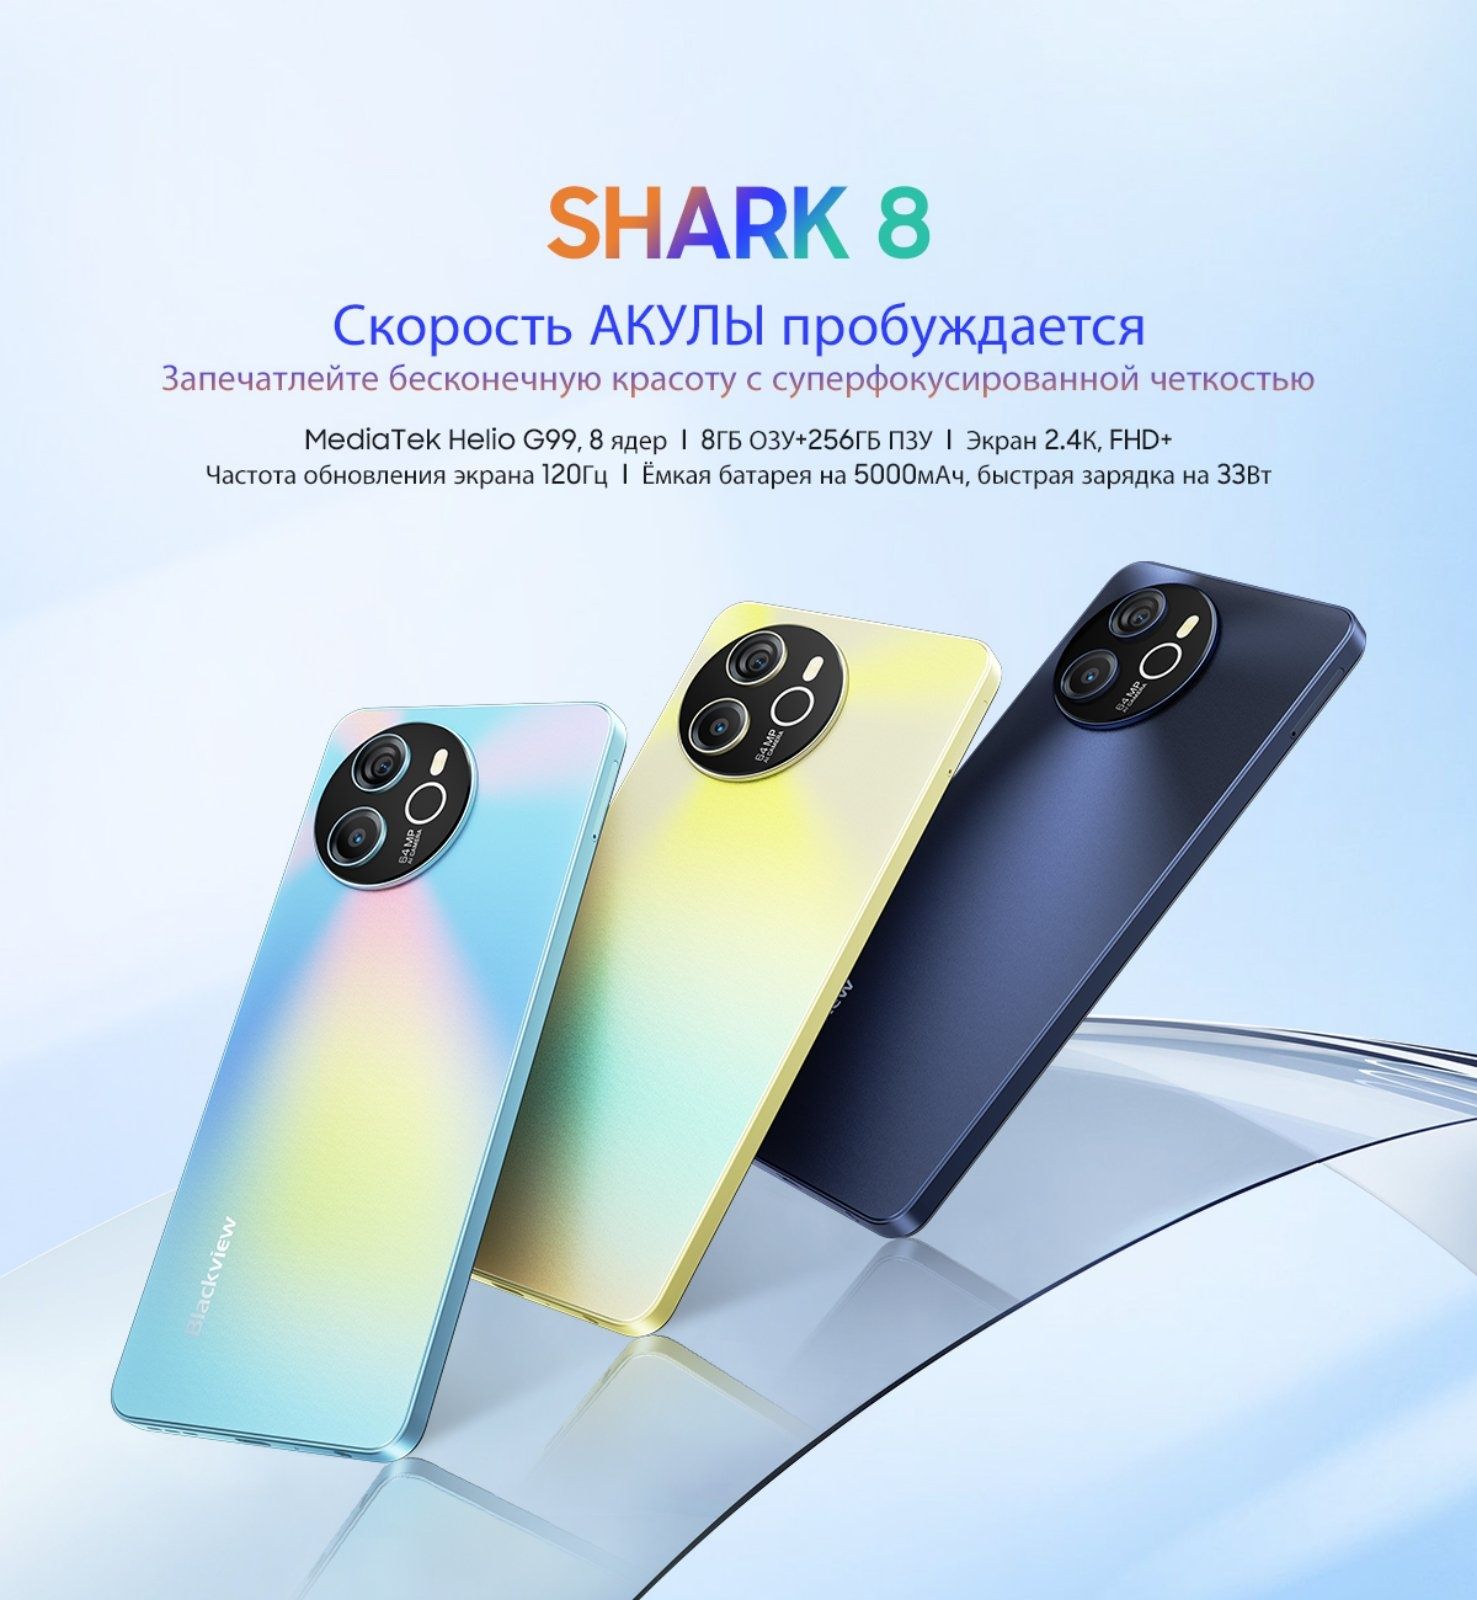 Смартфон Blackwiev shark 8 8/128 NFC